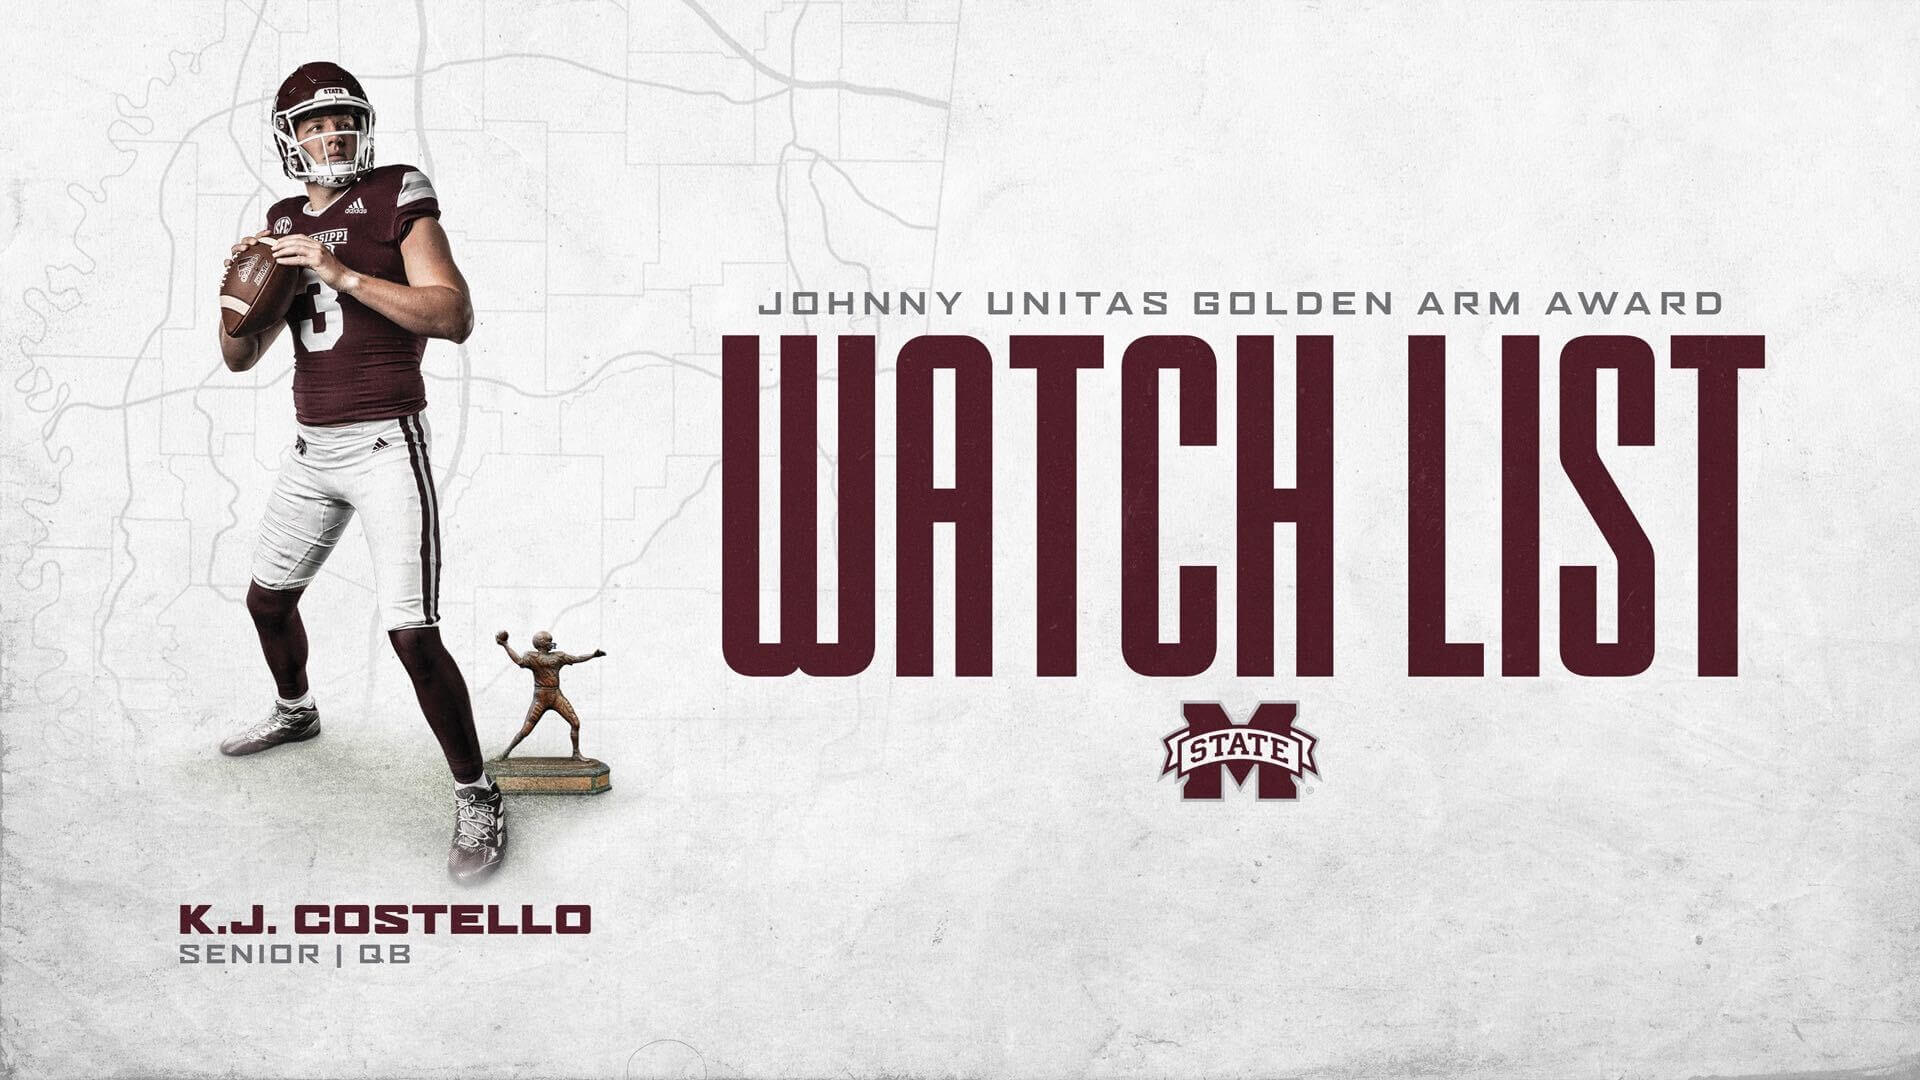 MSU’s Costello Named to Johnny Unitas Golden Arm Watchlist